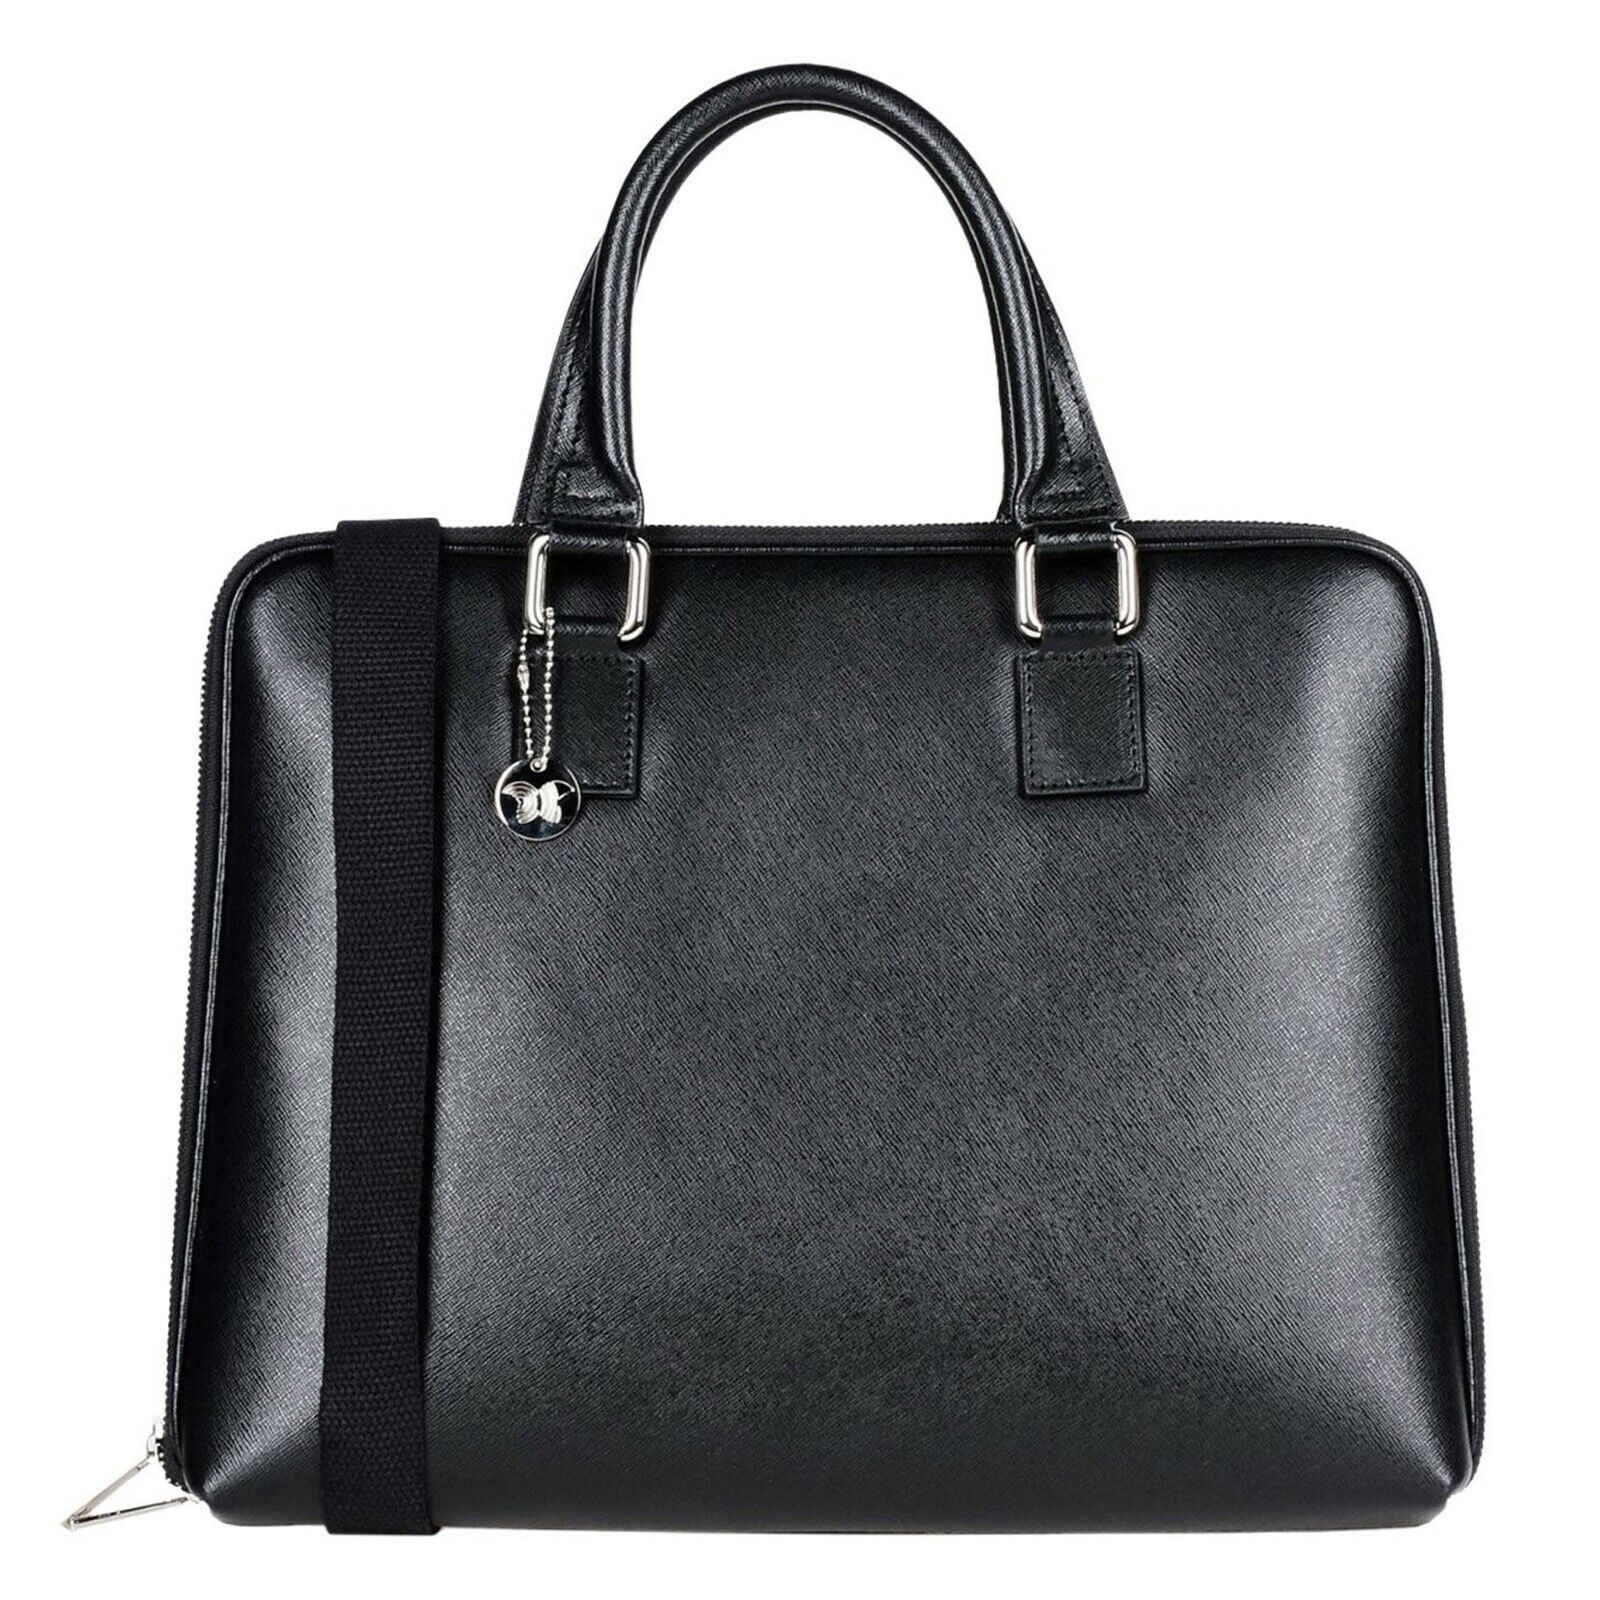 Laura Di Maggio Italian Made Black Leather Laptop Bag Business Briefcase Handbag